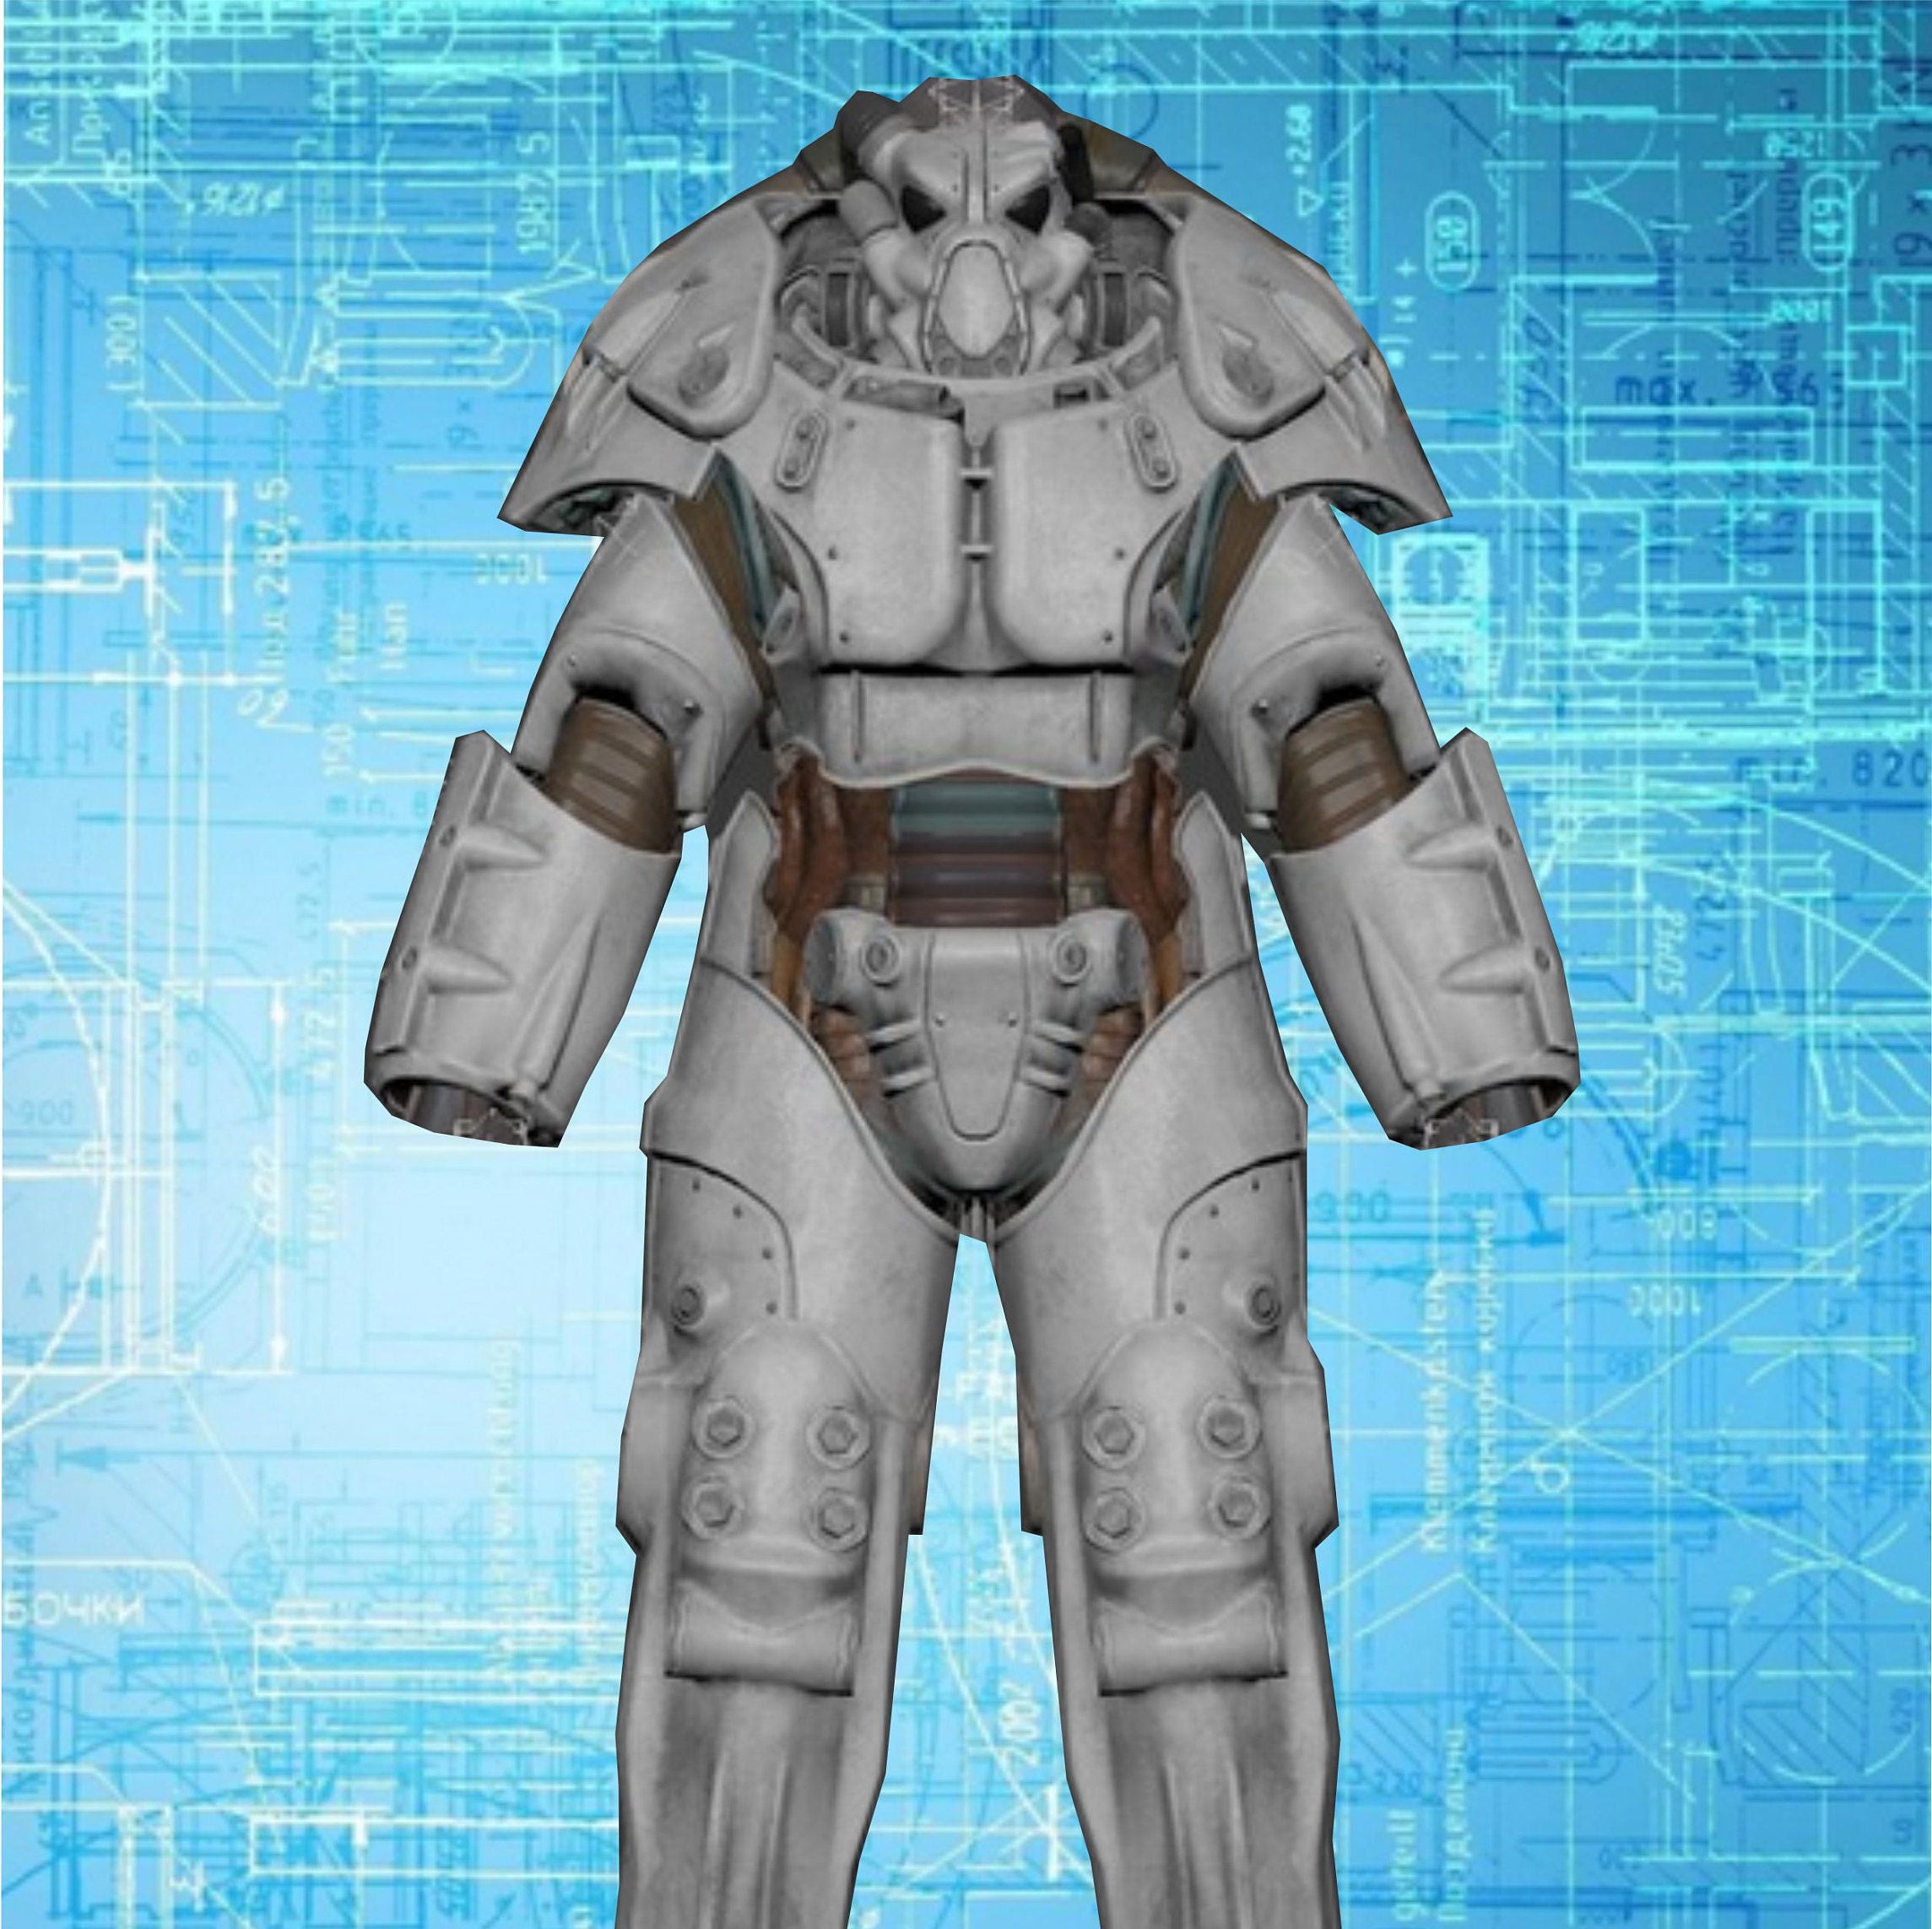 Fallout 4 X-01 power armor blueprints for EVA Foam build